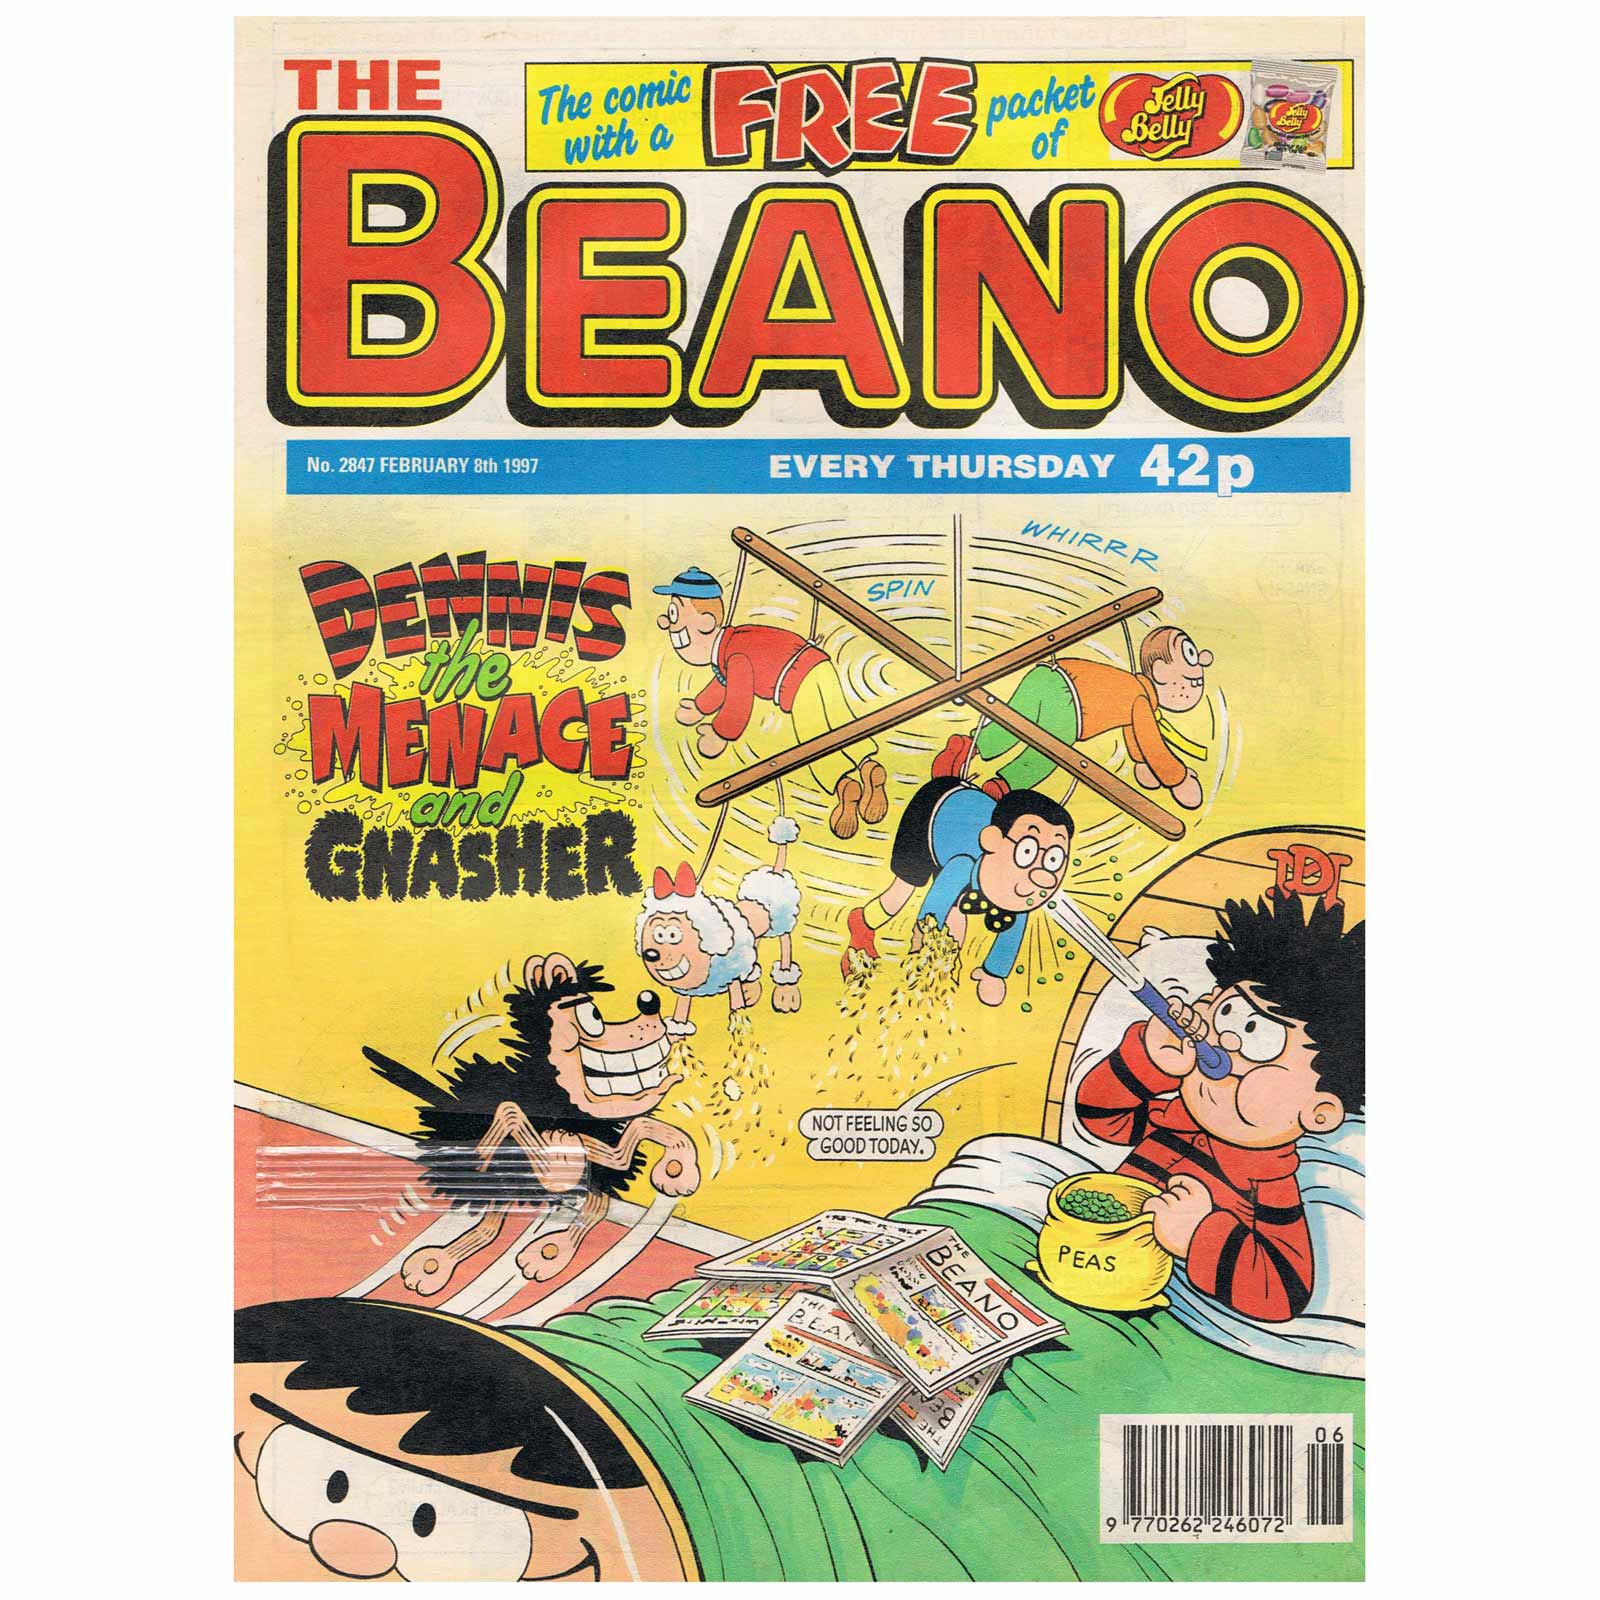 Issue No 2716-06/08/1994 THE BEANO Comic UK paper comic